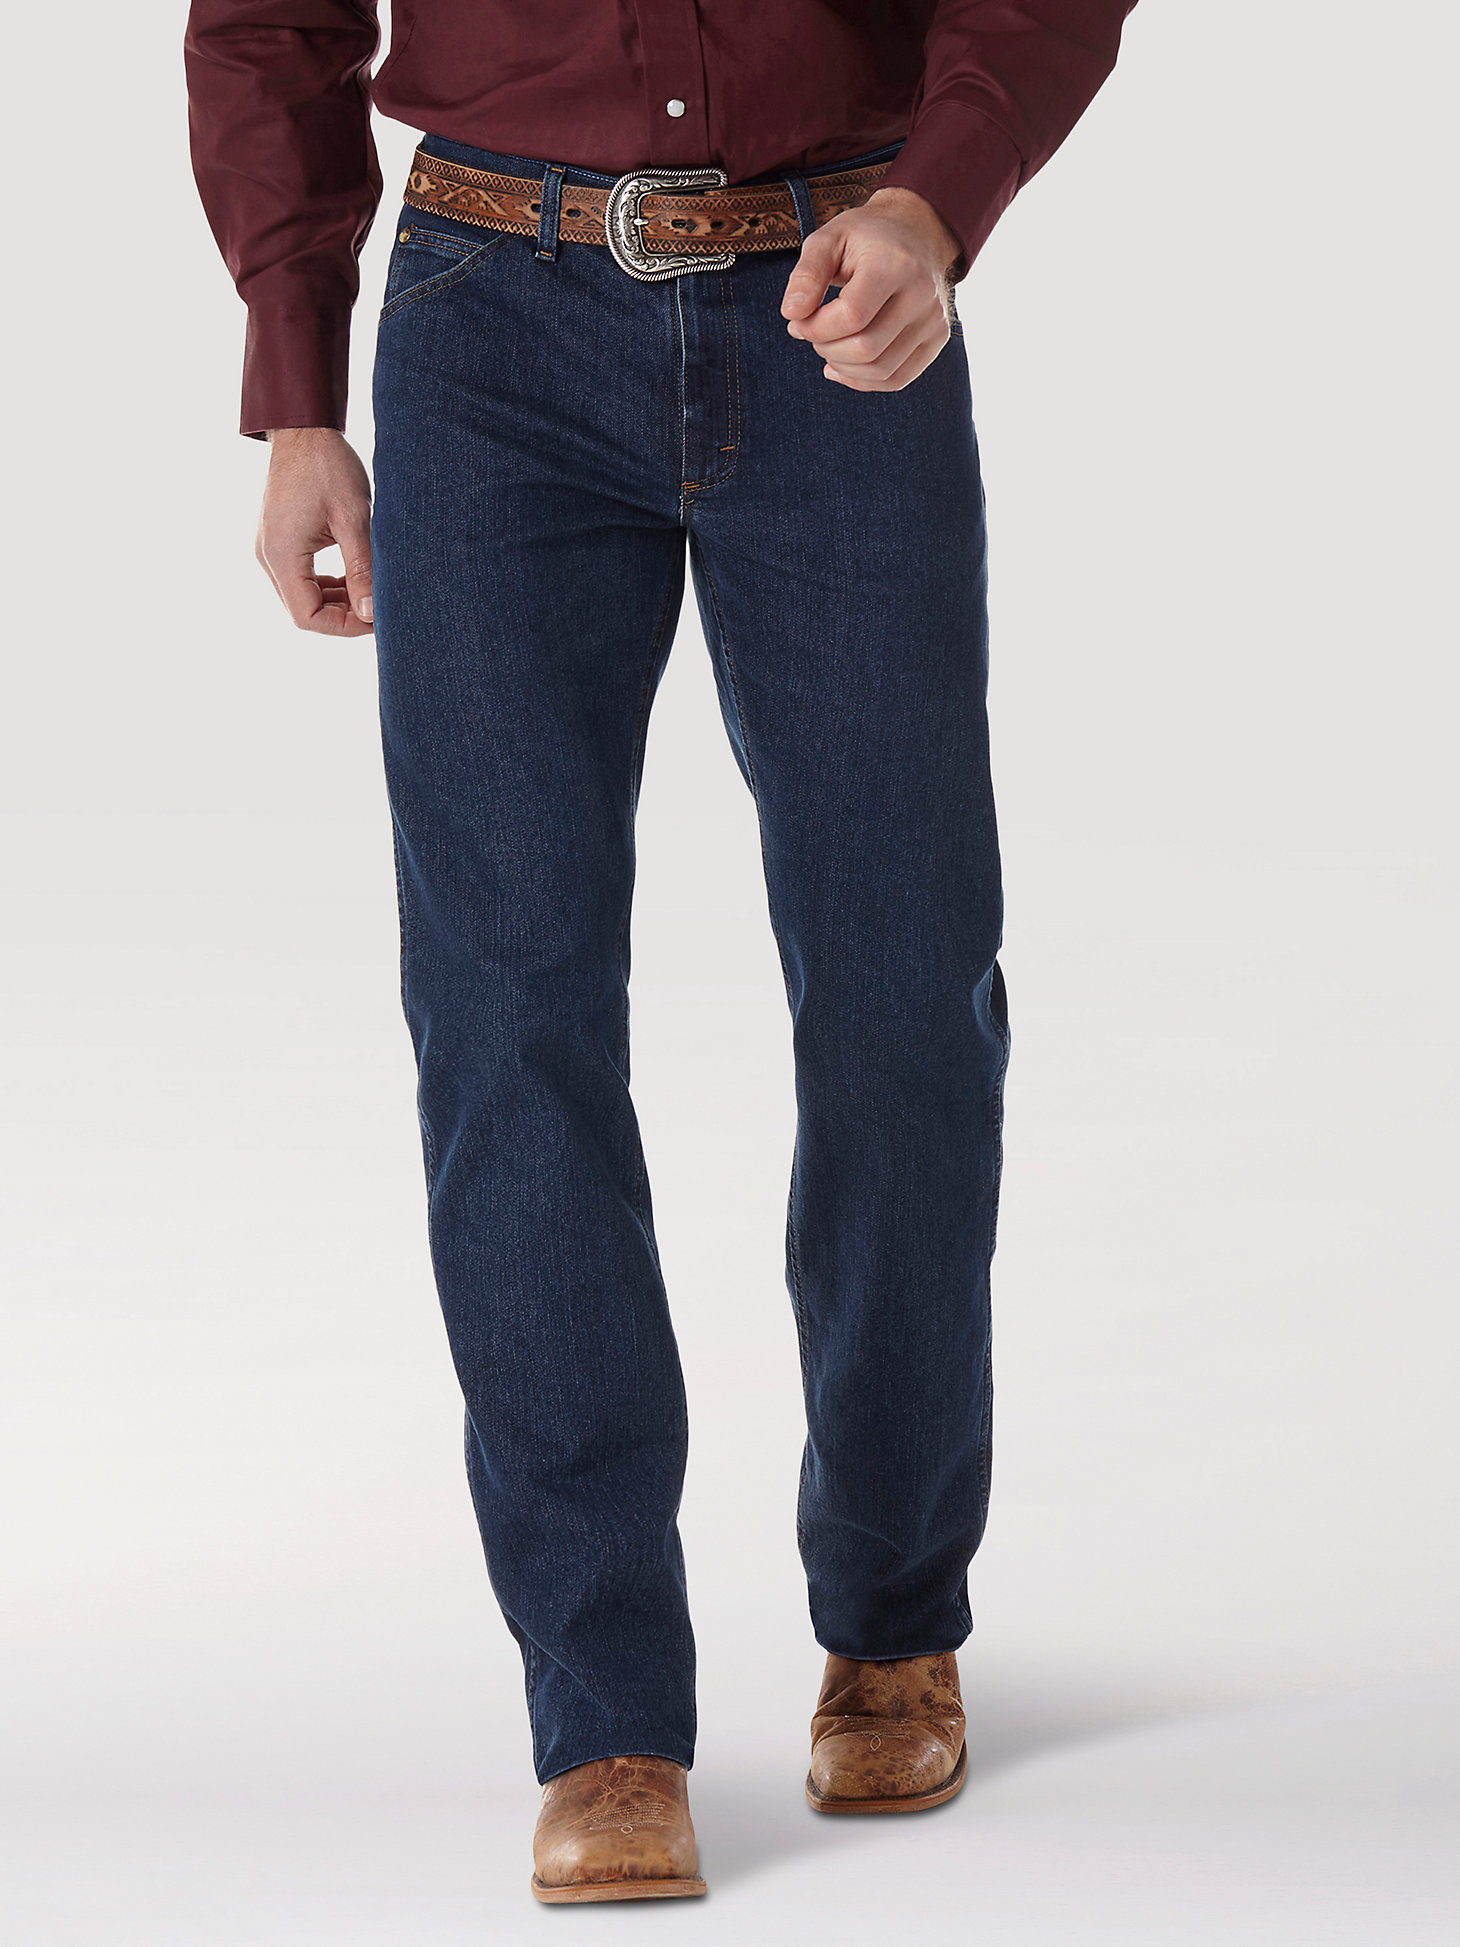 Premium Performance Cowboy Cut® Advanced Comfort Wicking Regular Fit Jean in Midnight Rinse main view